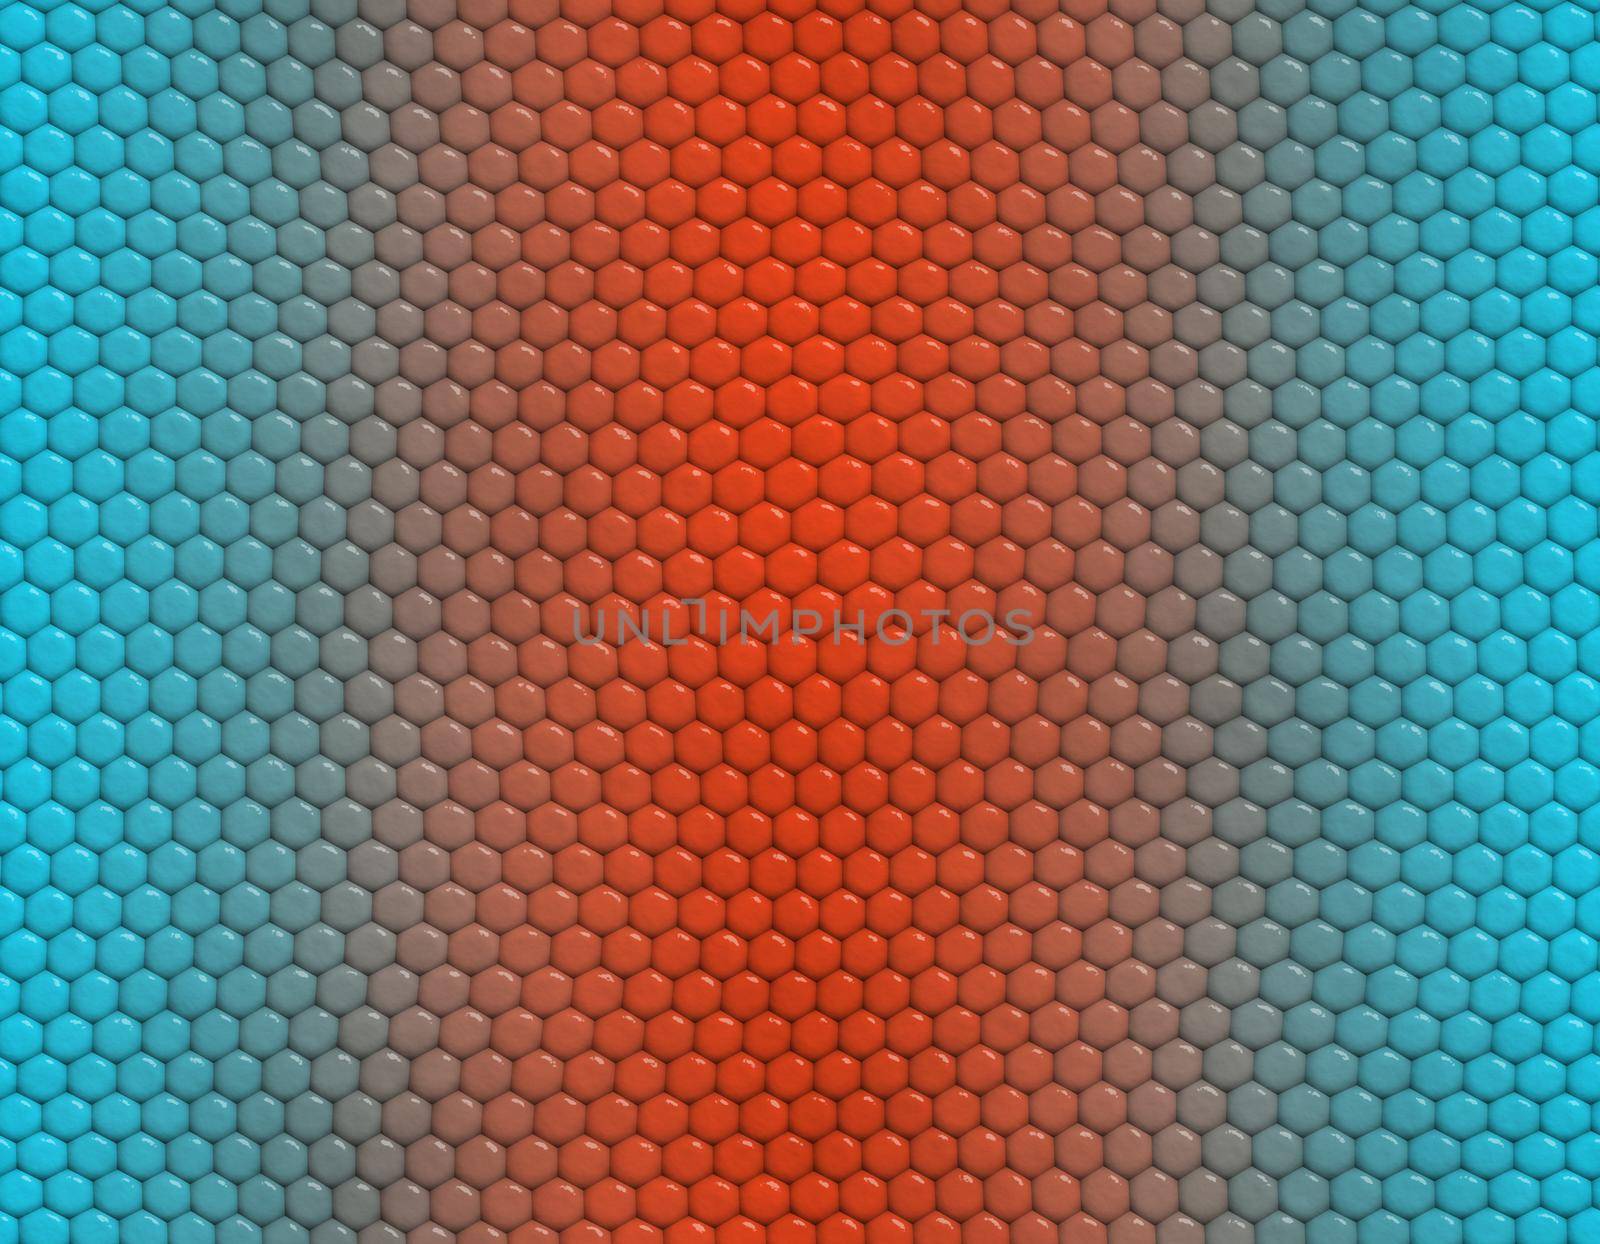 Light blue and orange gradient snake skin pattern, hexagonal scale by Bezdnatm